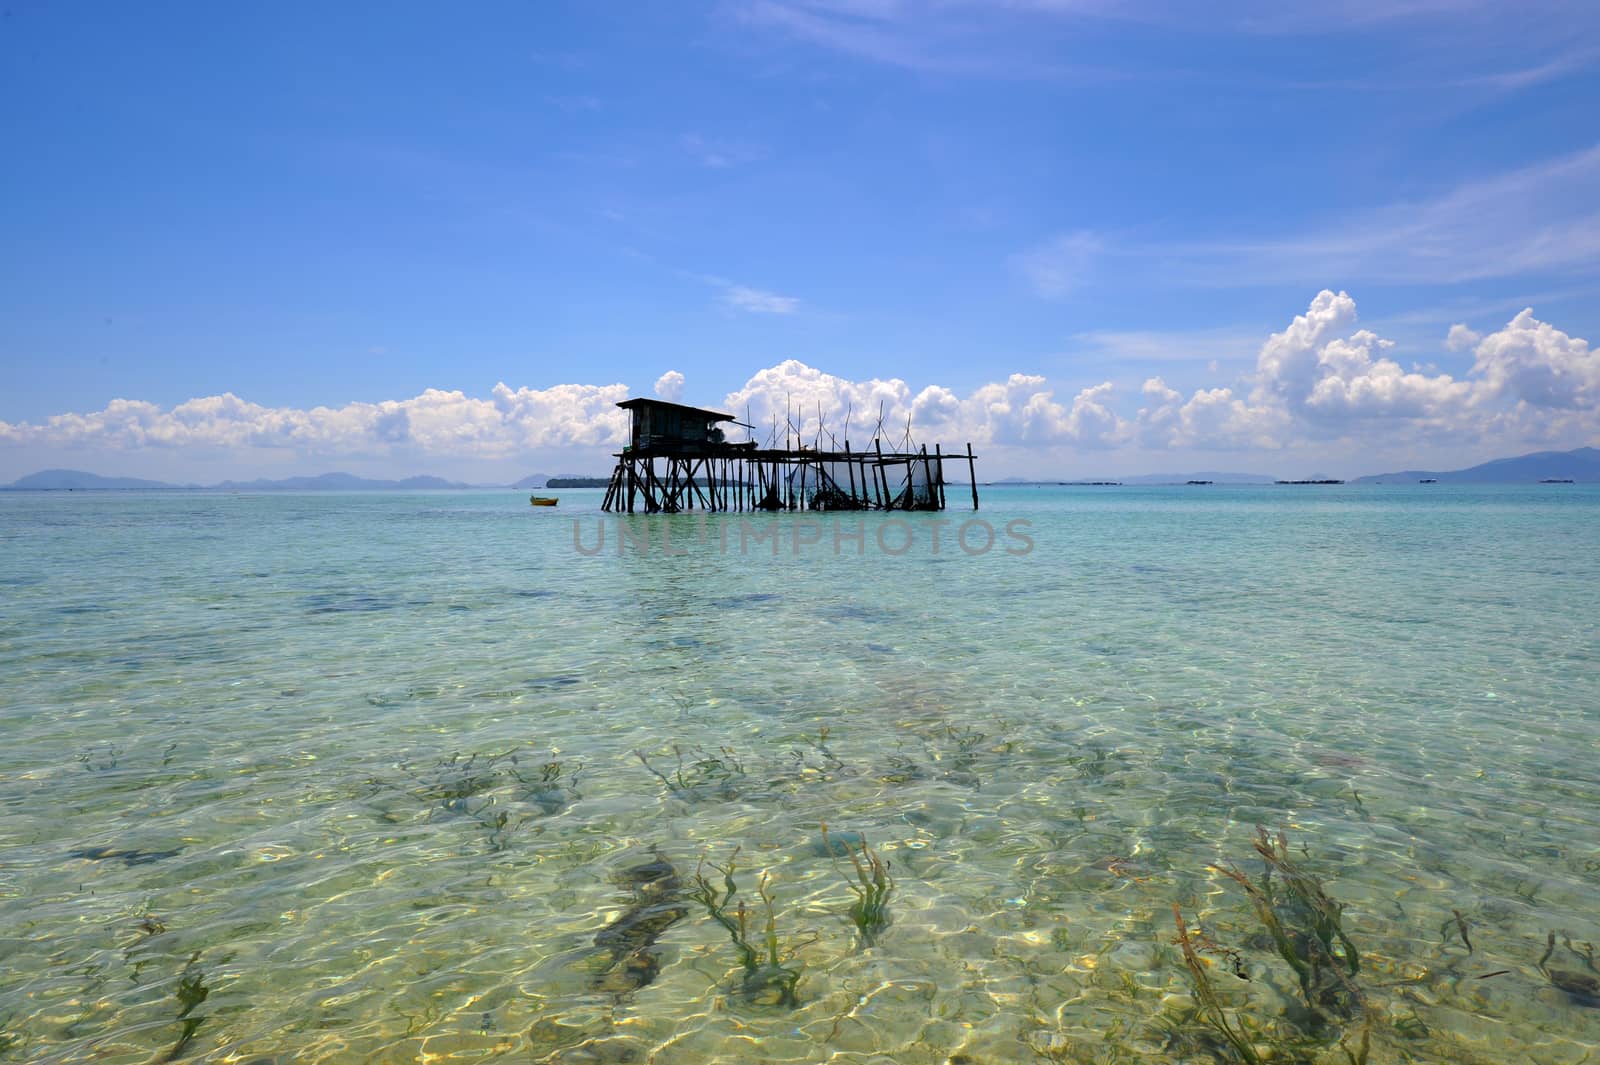 Bajau’s floating village at Semporna Sabah, Borneo, Malaysia by shahreen